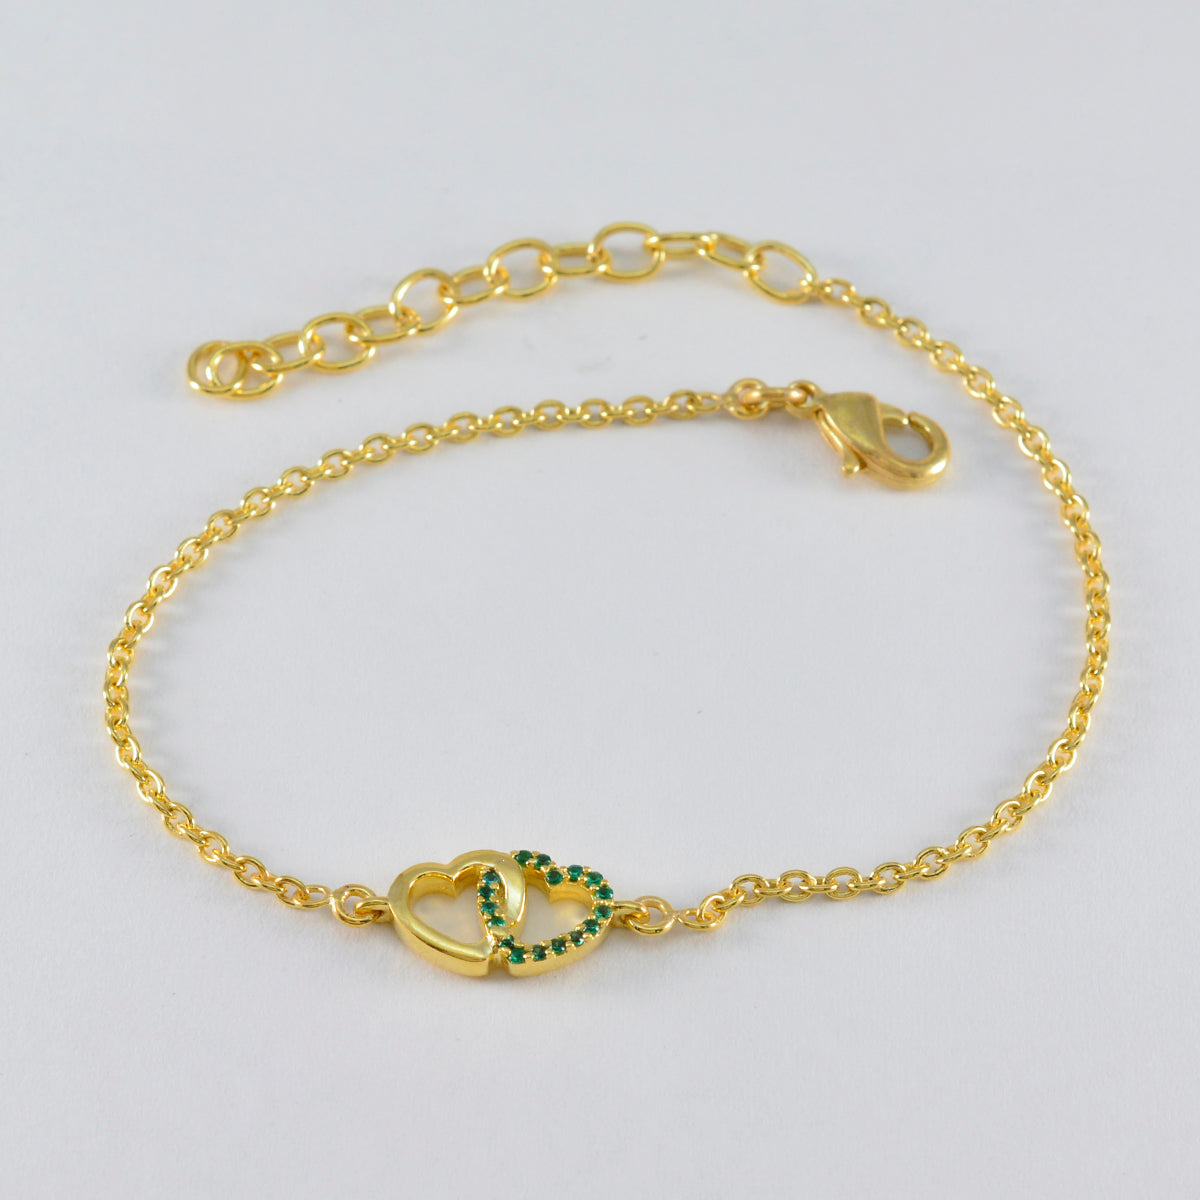 Riyo Vintage 925 Sterling Silver With Gold Plated Bracelet For Girl Emerald CZ Bracelet Bezel Setting Bracelet with Fish Hook Charm Bracelet L Size 6-8.5 Inch.